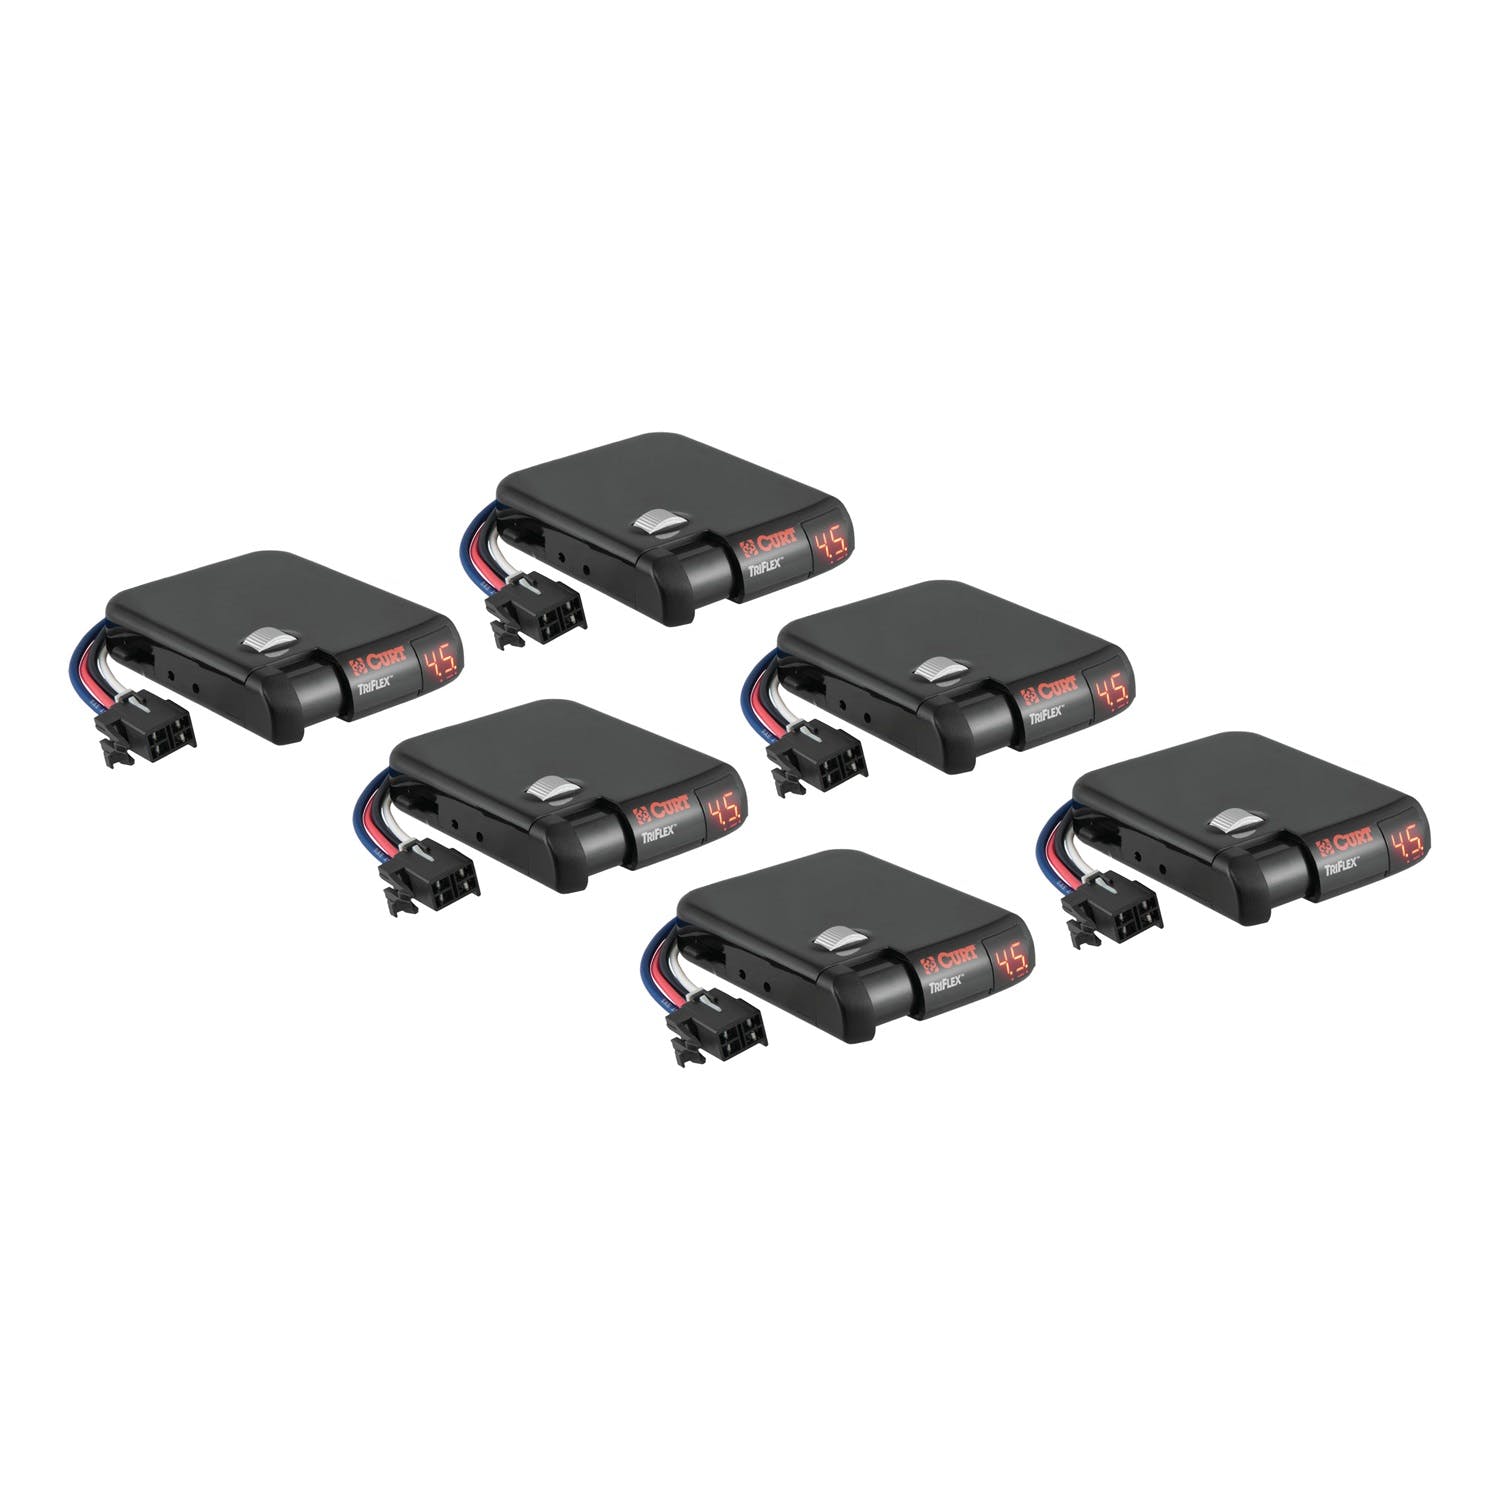 CURT 51142 TriFlex Proportional Trailer Brake Controllers (6-Pack)